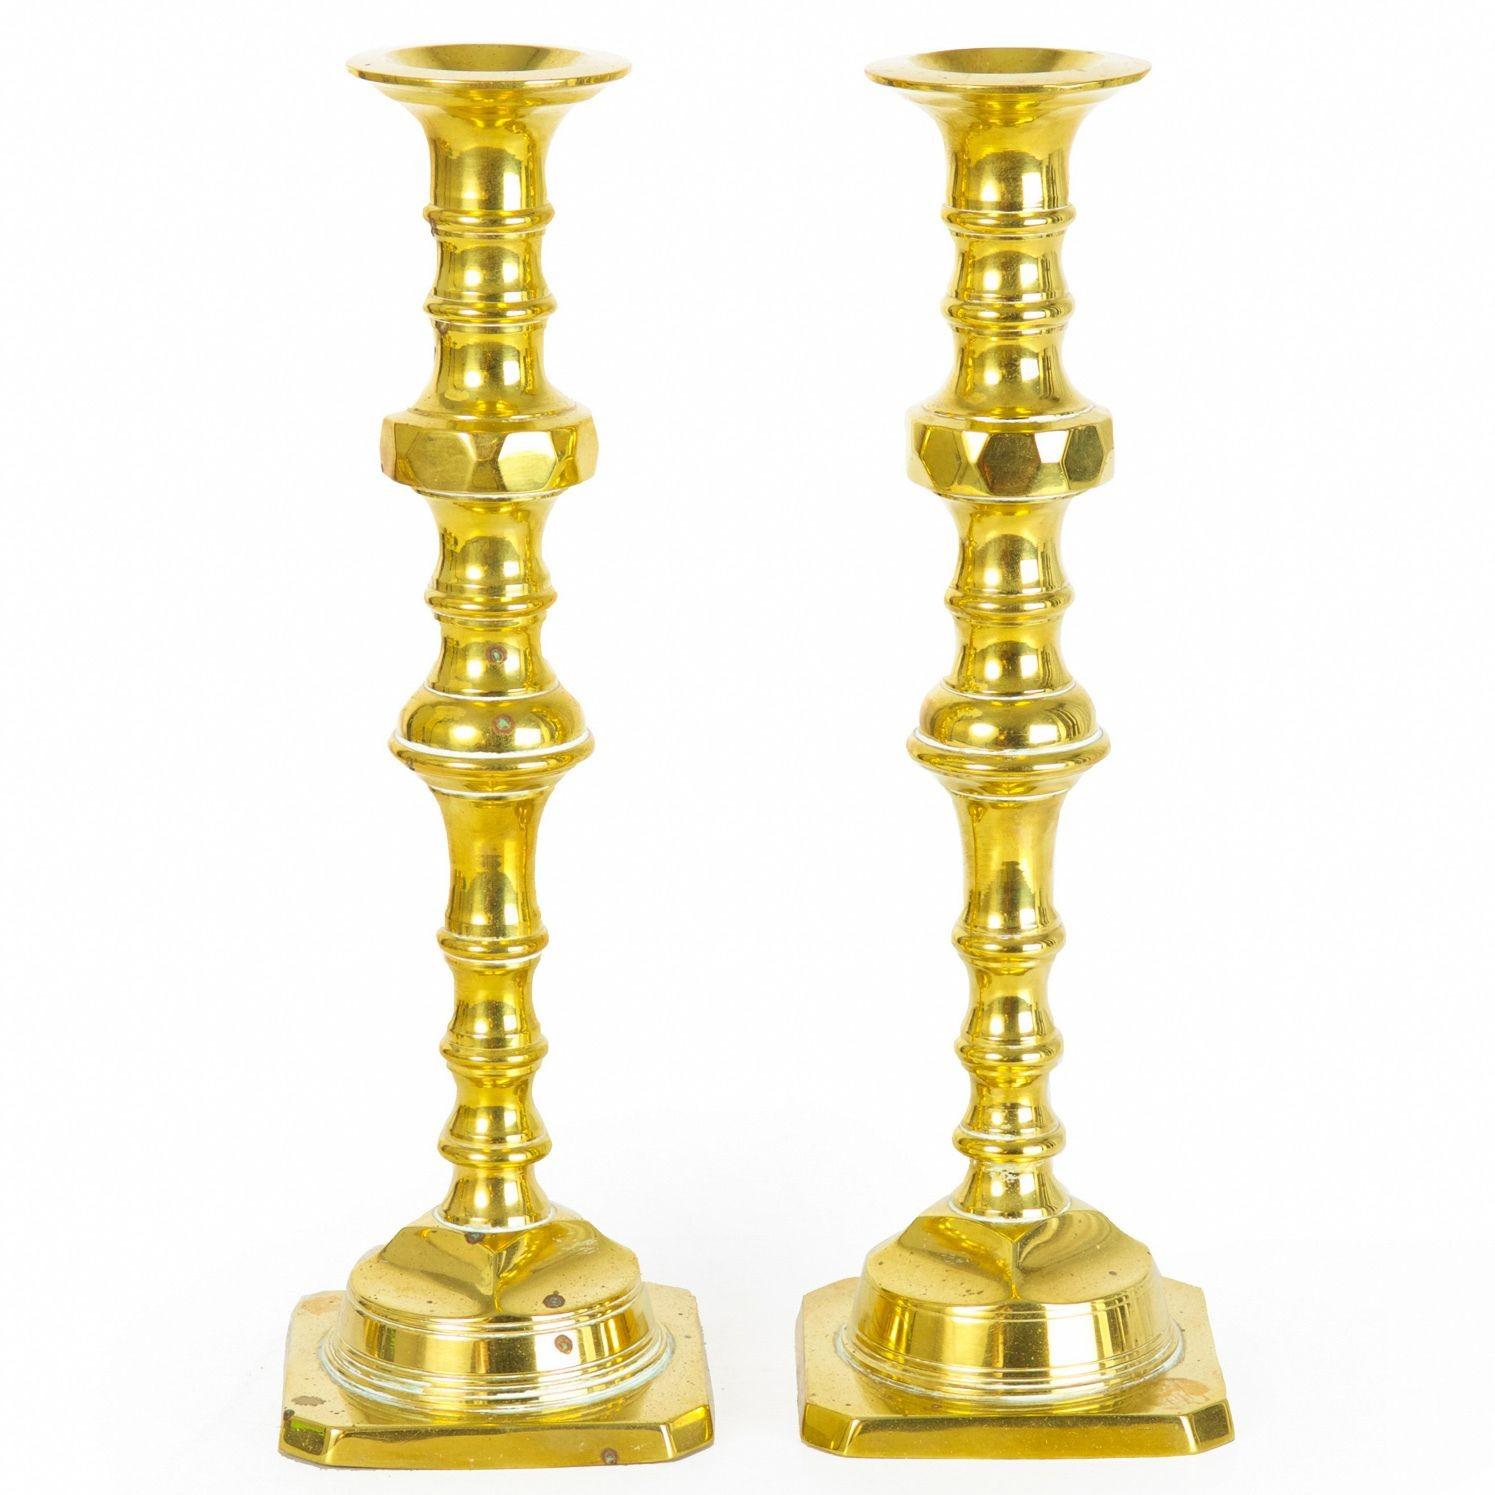 British Antique Pair of English Victorian Turned-Brass Candlesticks, 19th Century